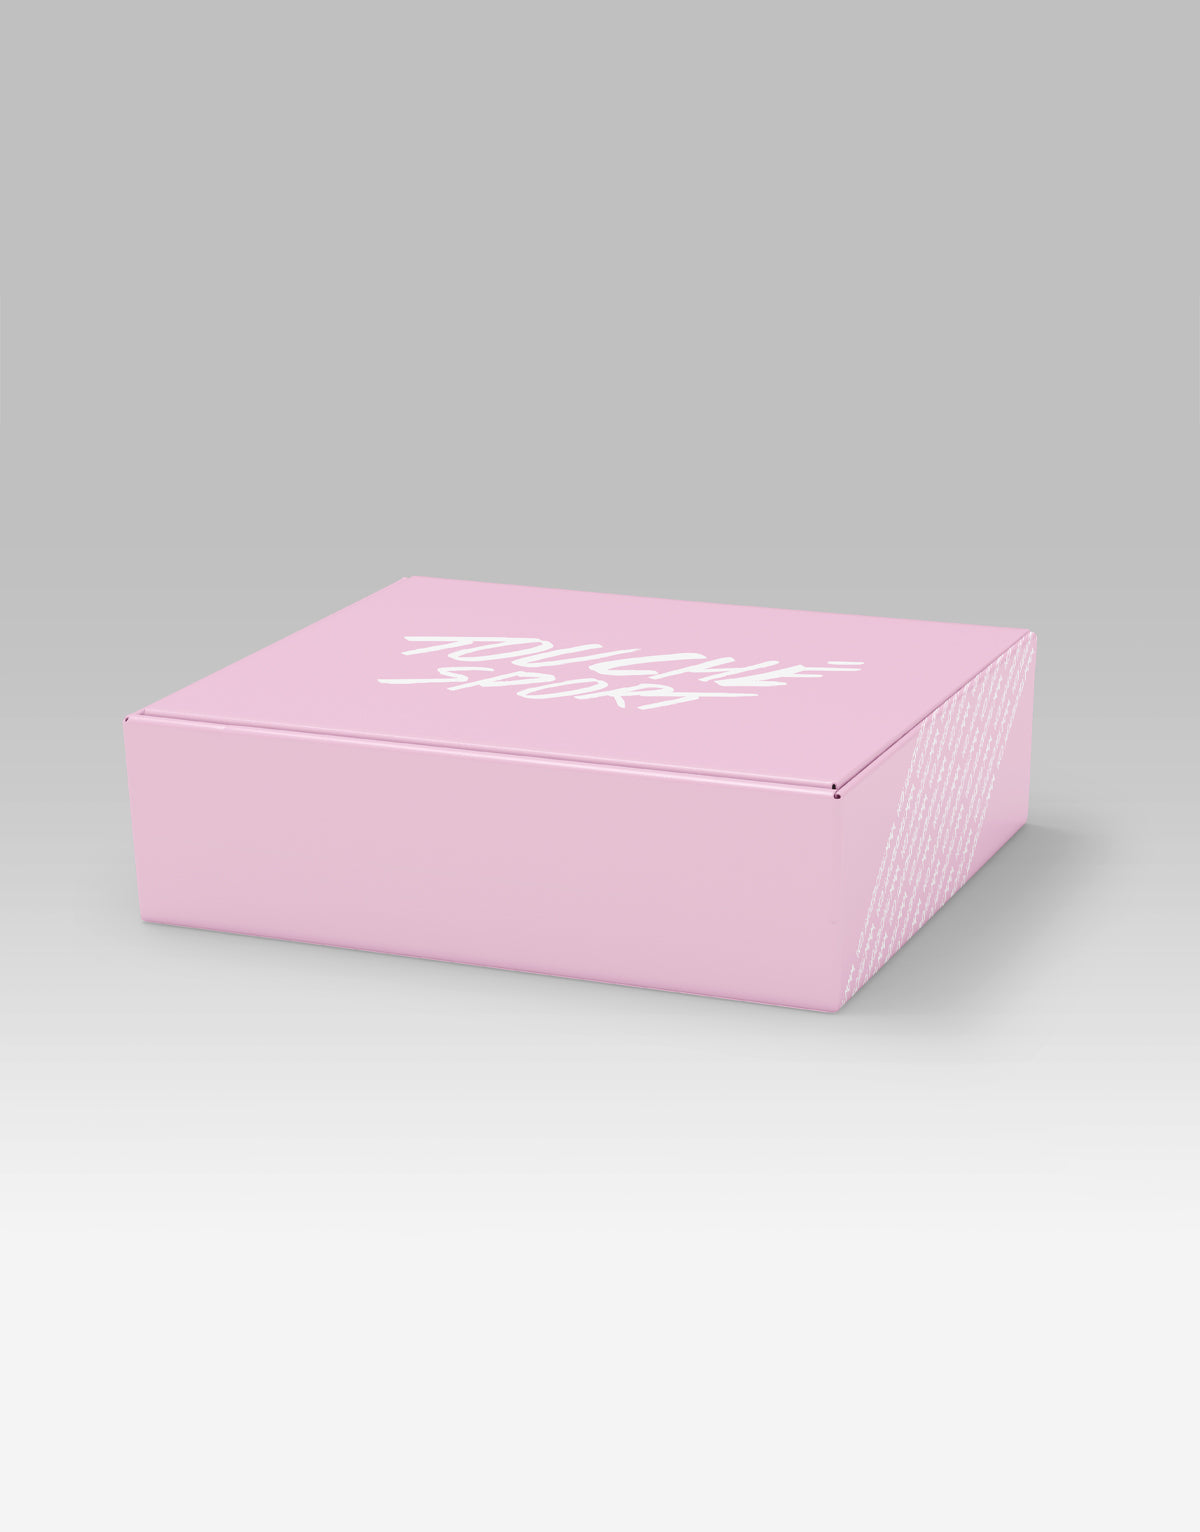 PINK GIFT BOX